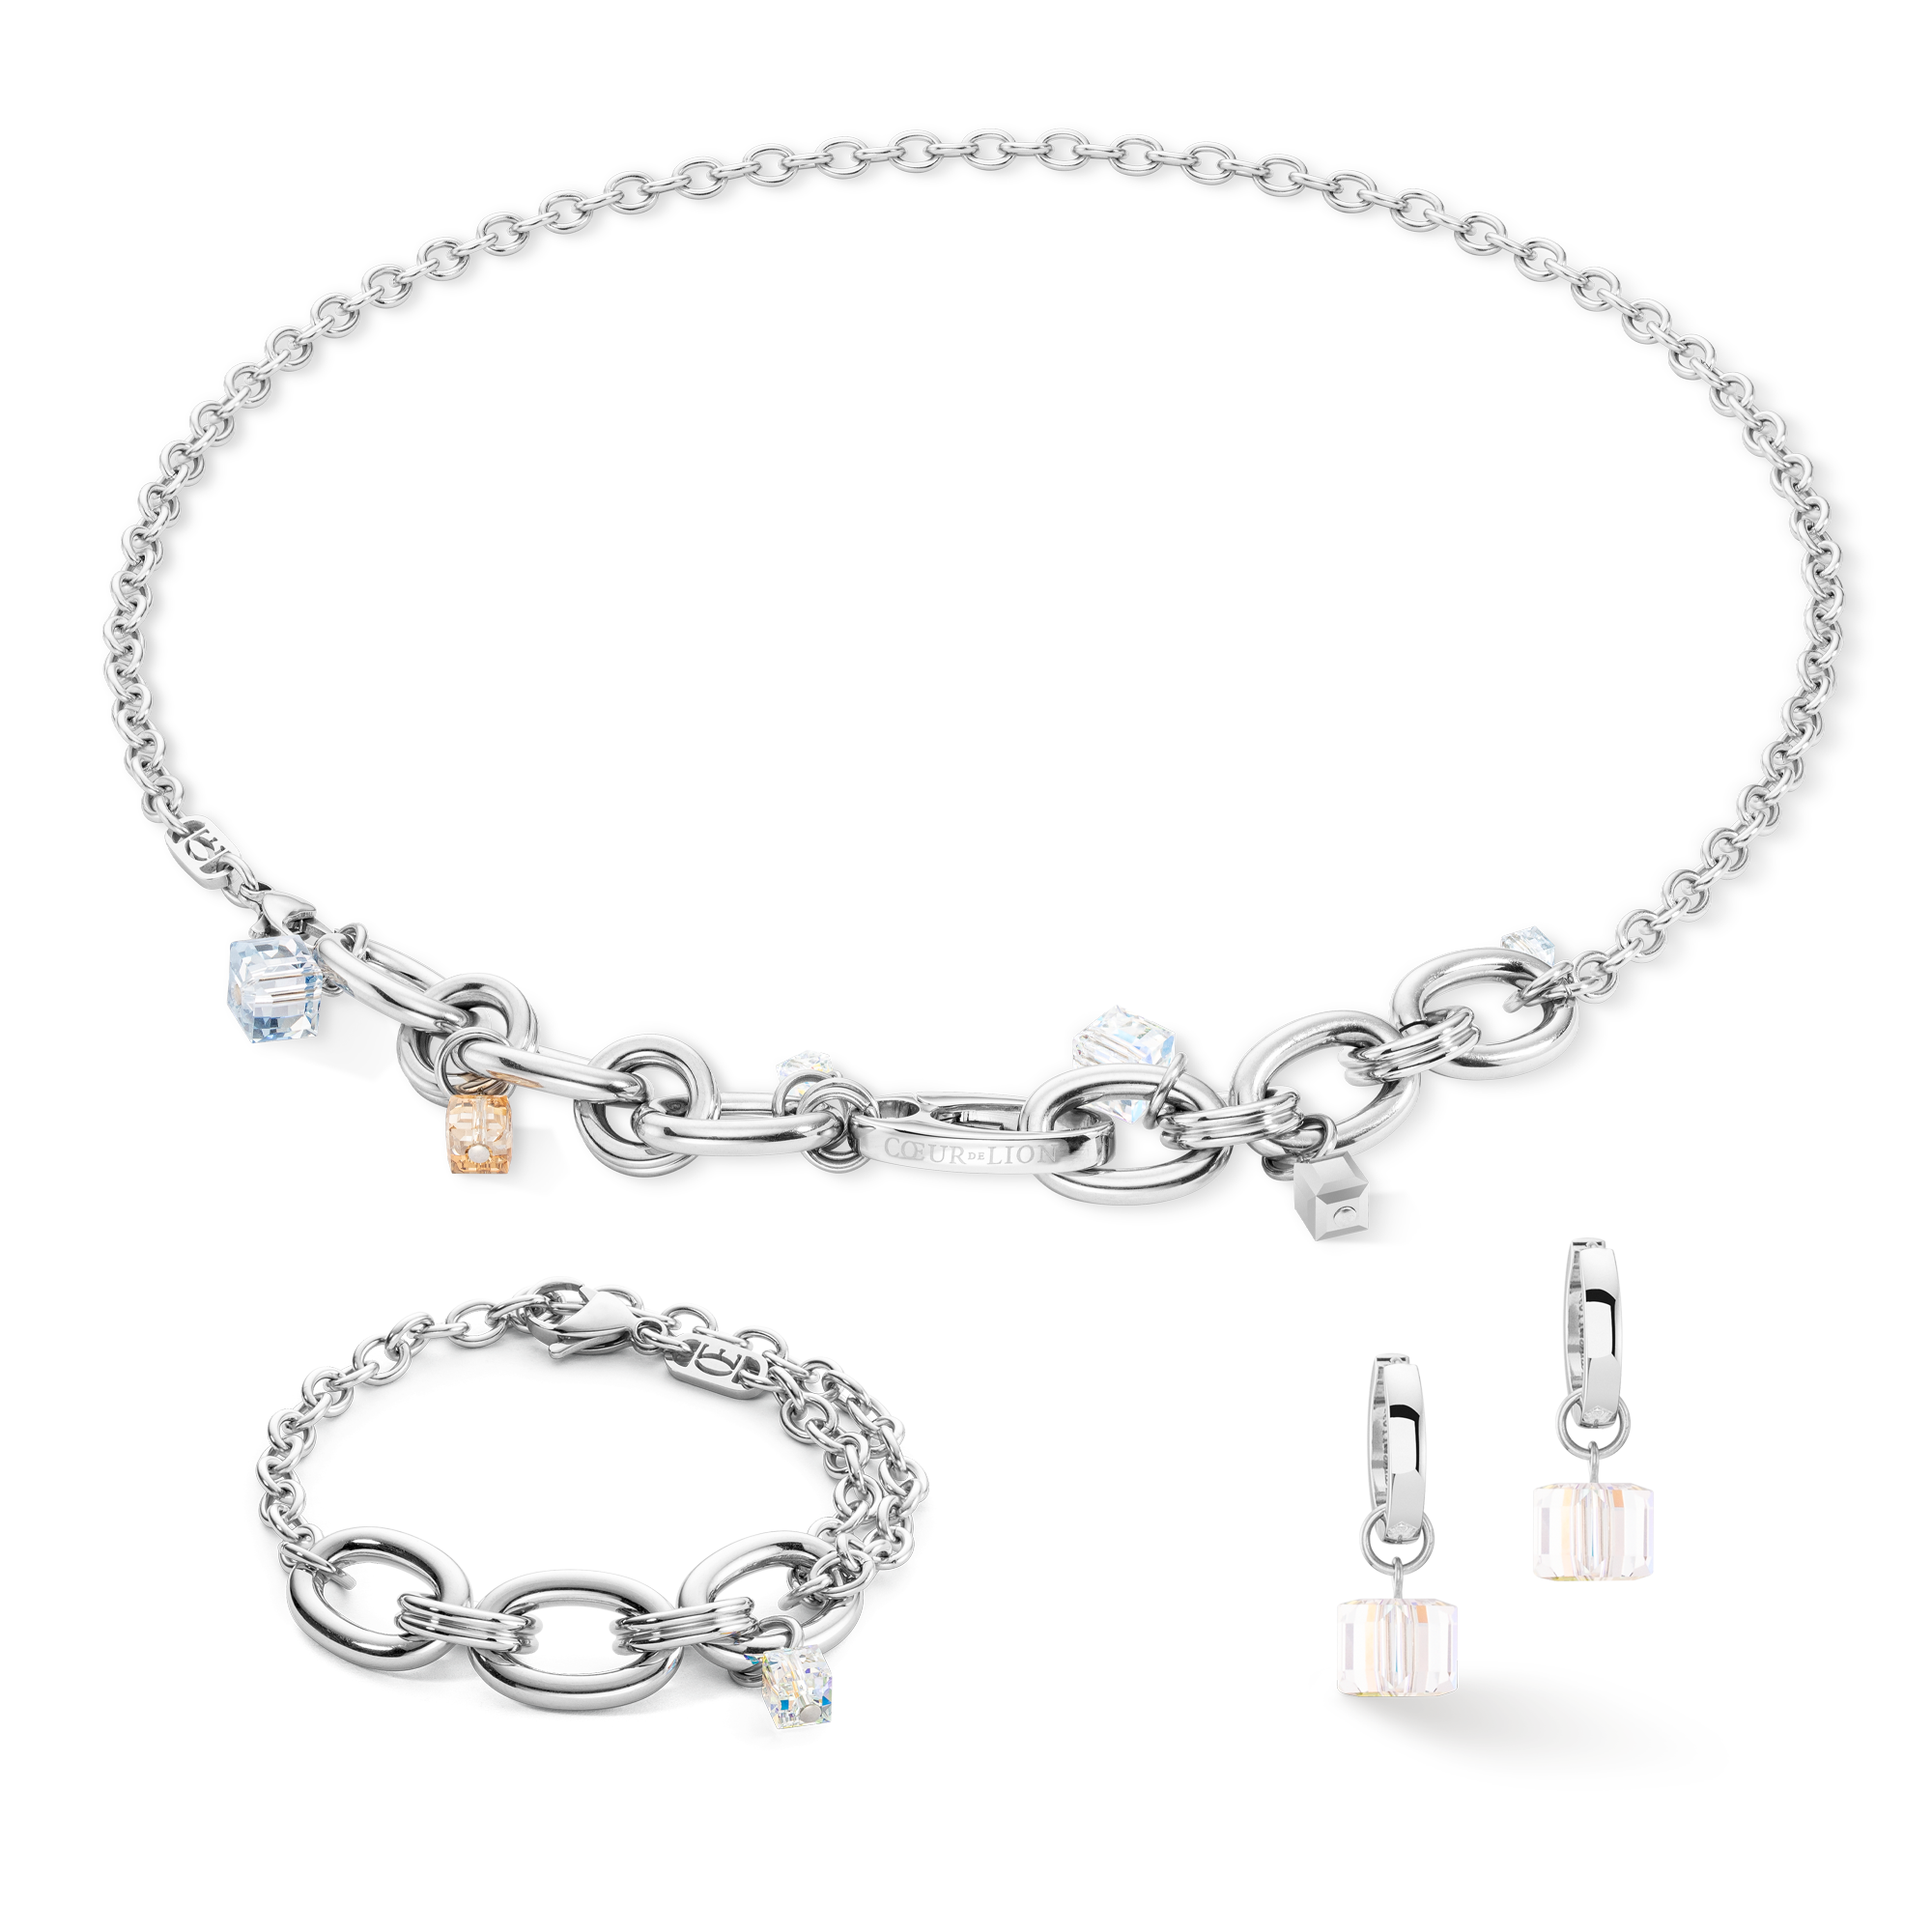 Halskette Chunky Chain Runway Exlusive Silber